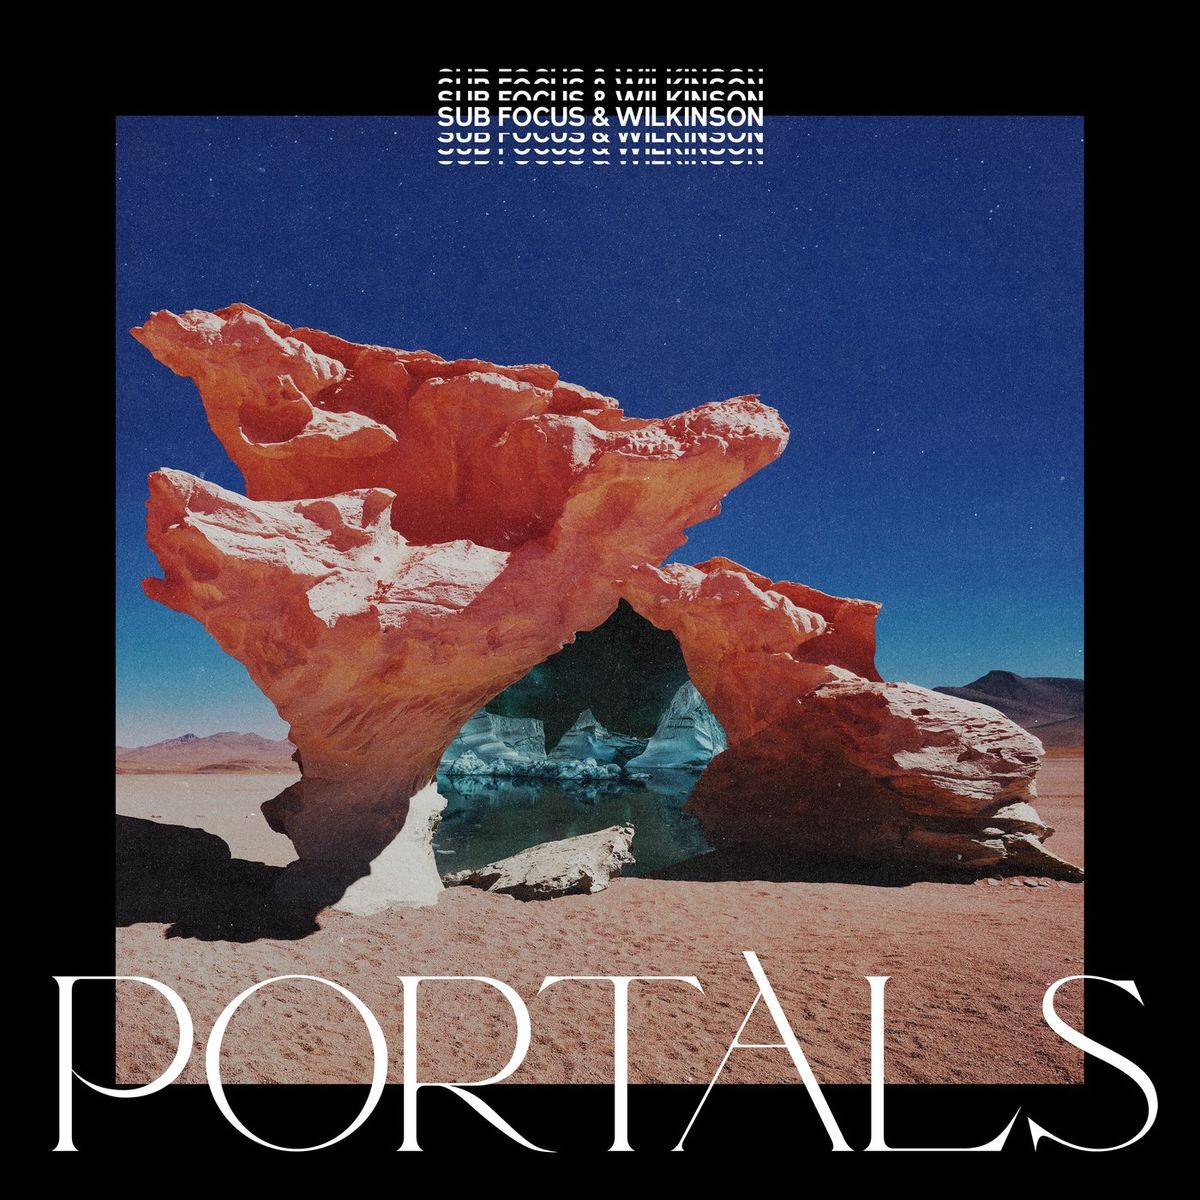 Sub Focus & Wilkinson – Portals